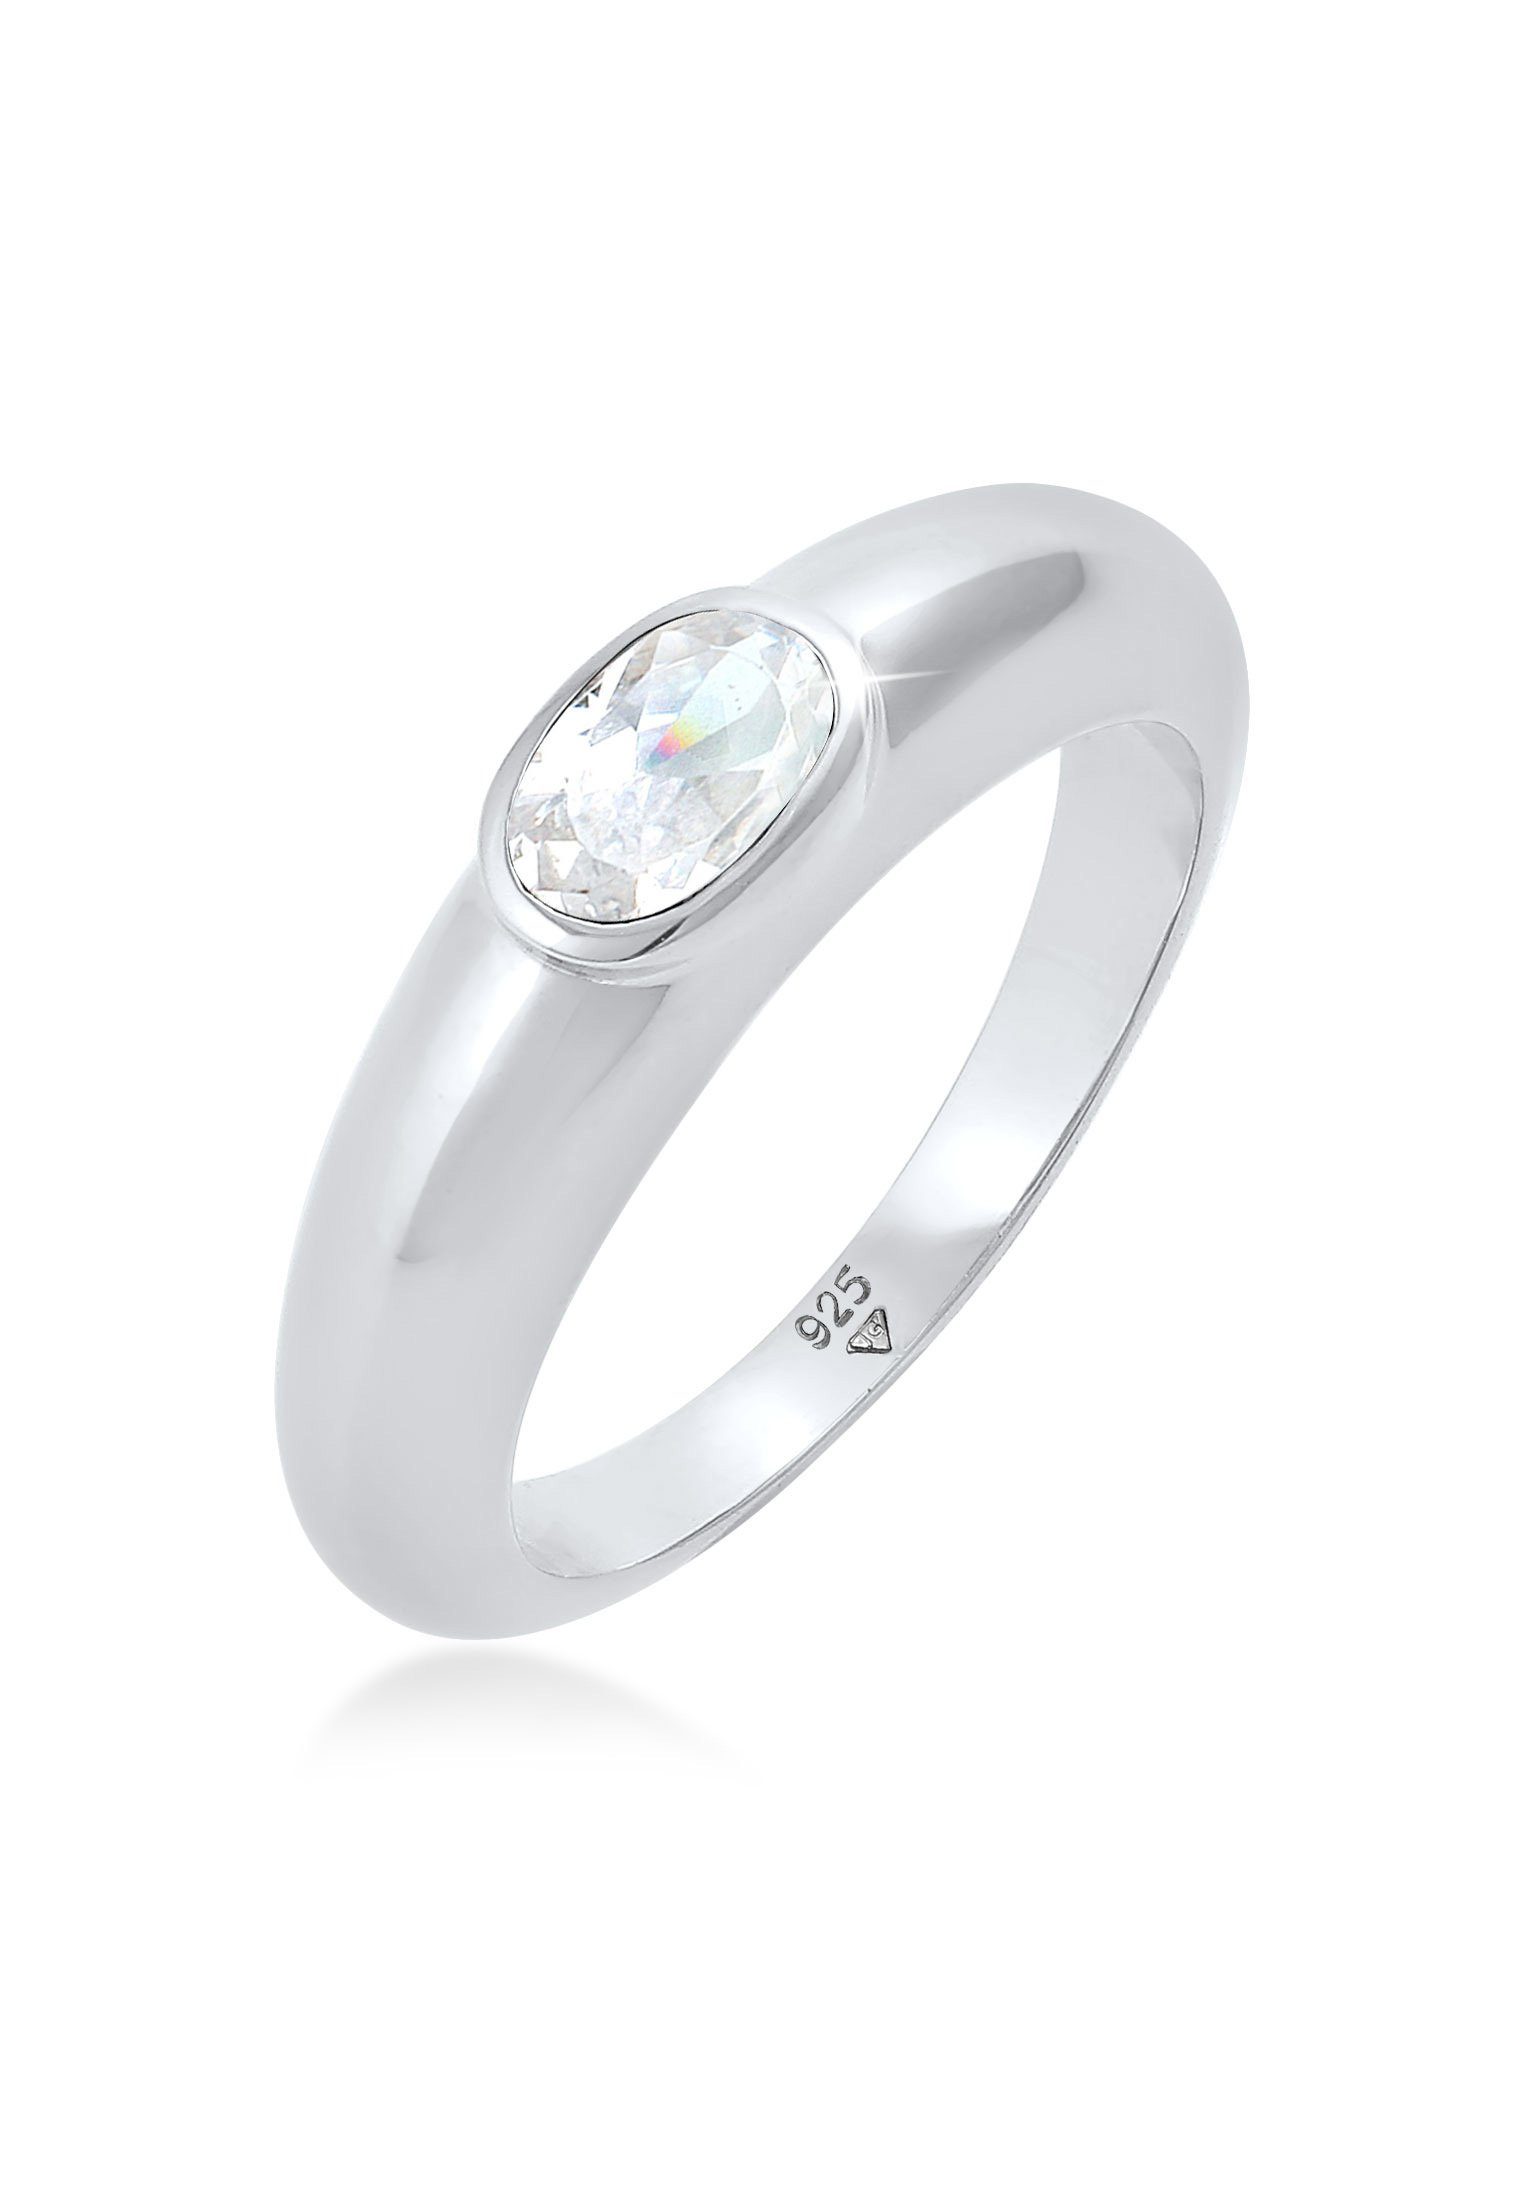 Elli Fingerring Bandring Zirkonia Oval Solitär 925 Sterling Silber,  Eleganter Ring, puristisch im Design für Damen